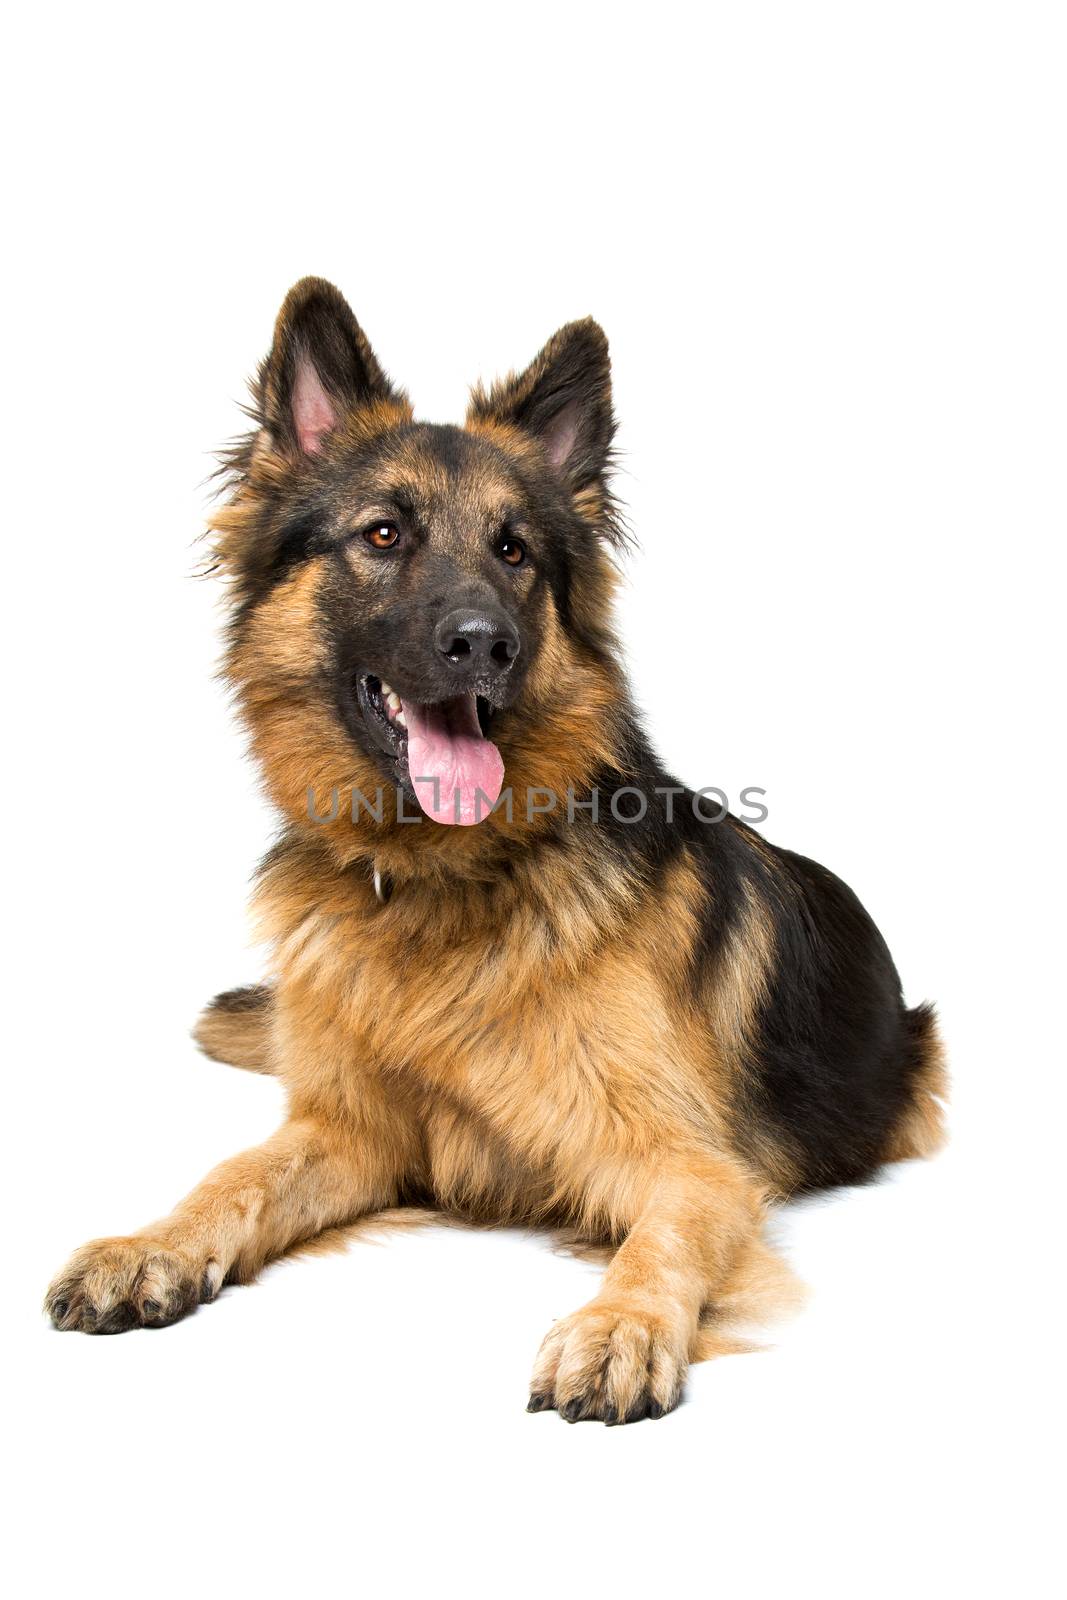 German shepherd dog by eriklam